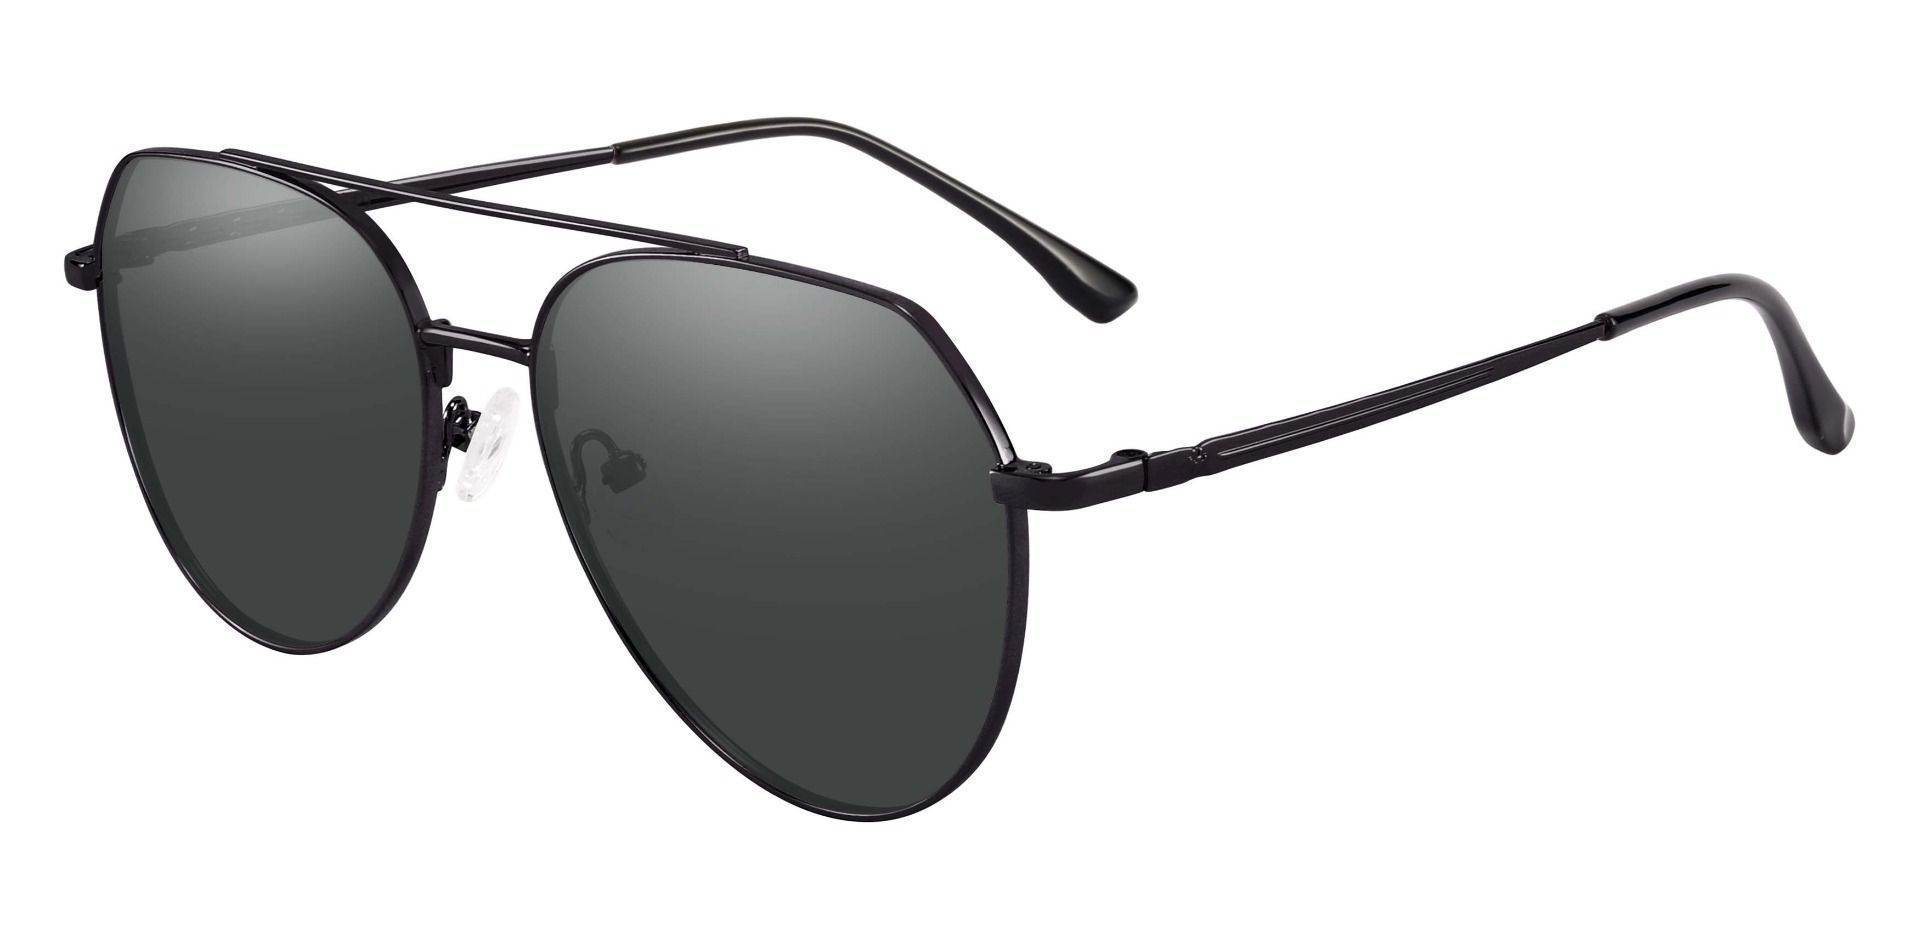 Wexford Aviator Prescription Sunglasses - Black Frame With Gray Lenses